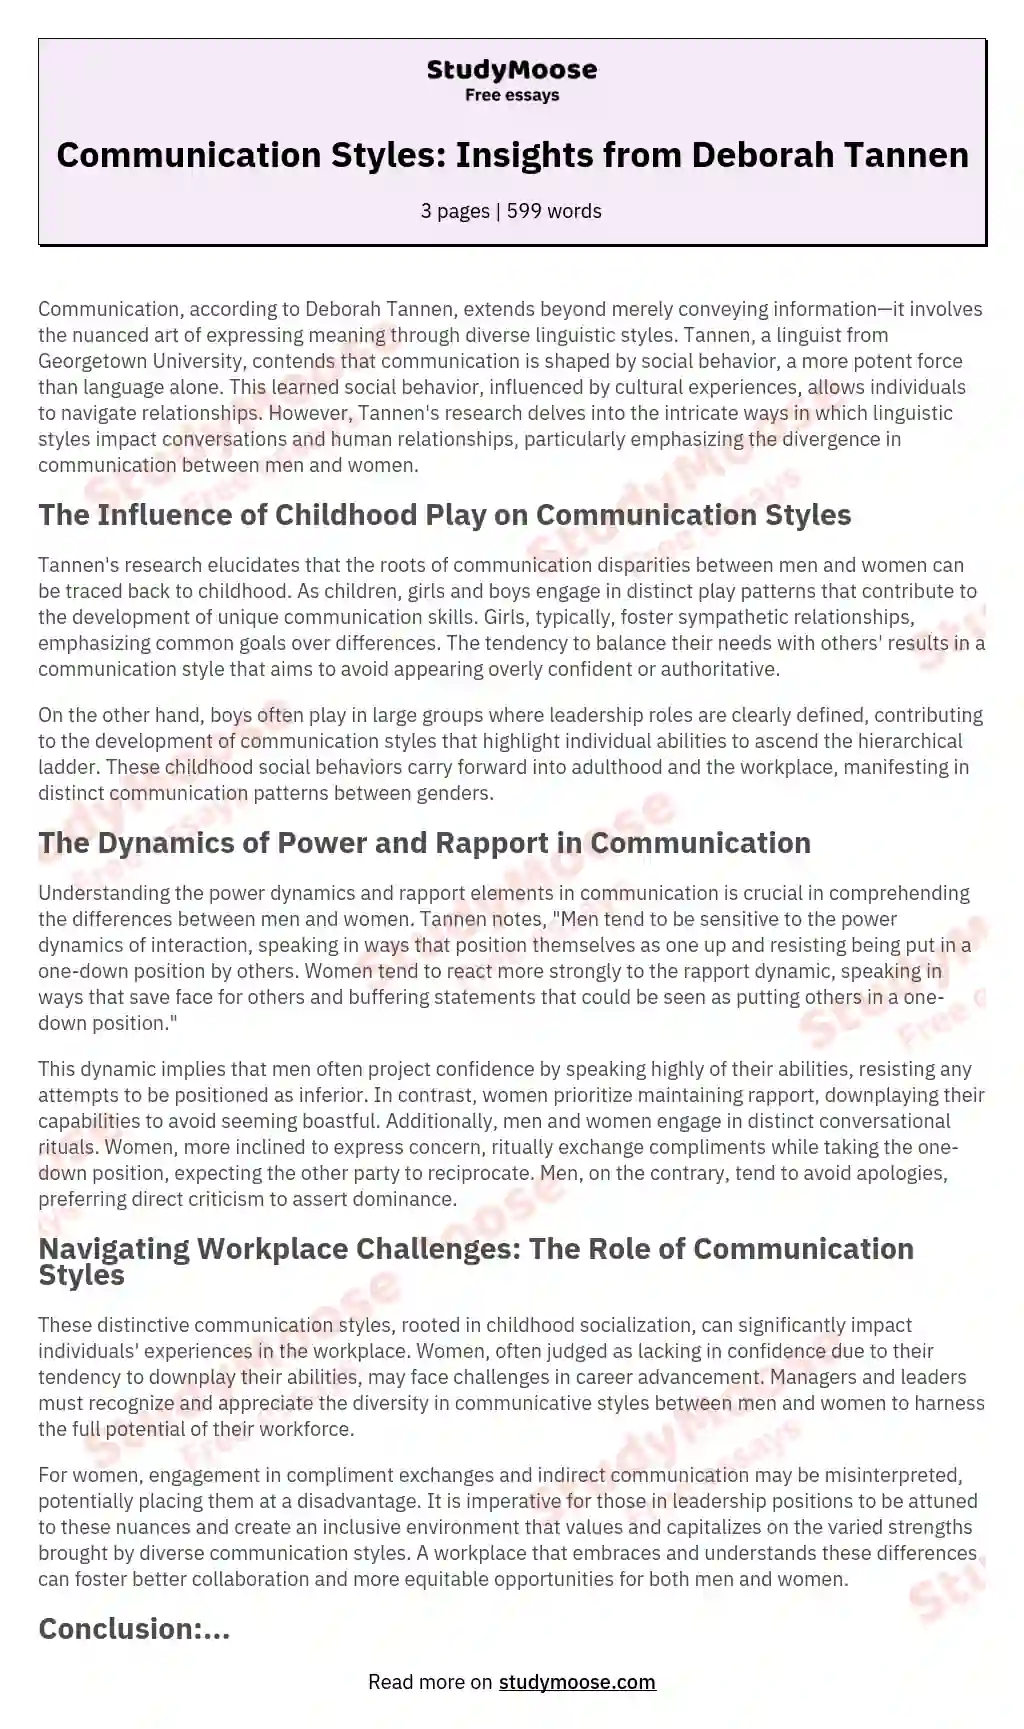 Communication Styles: Insights from Deborah Tannen essay